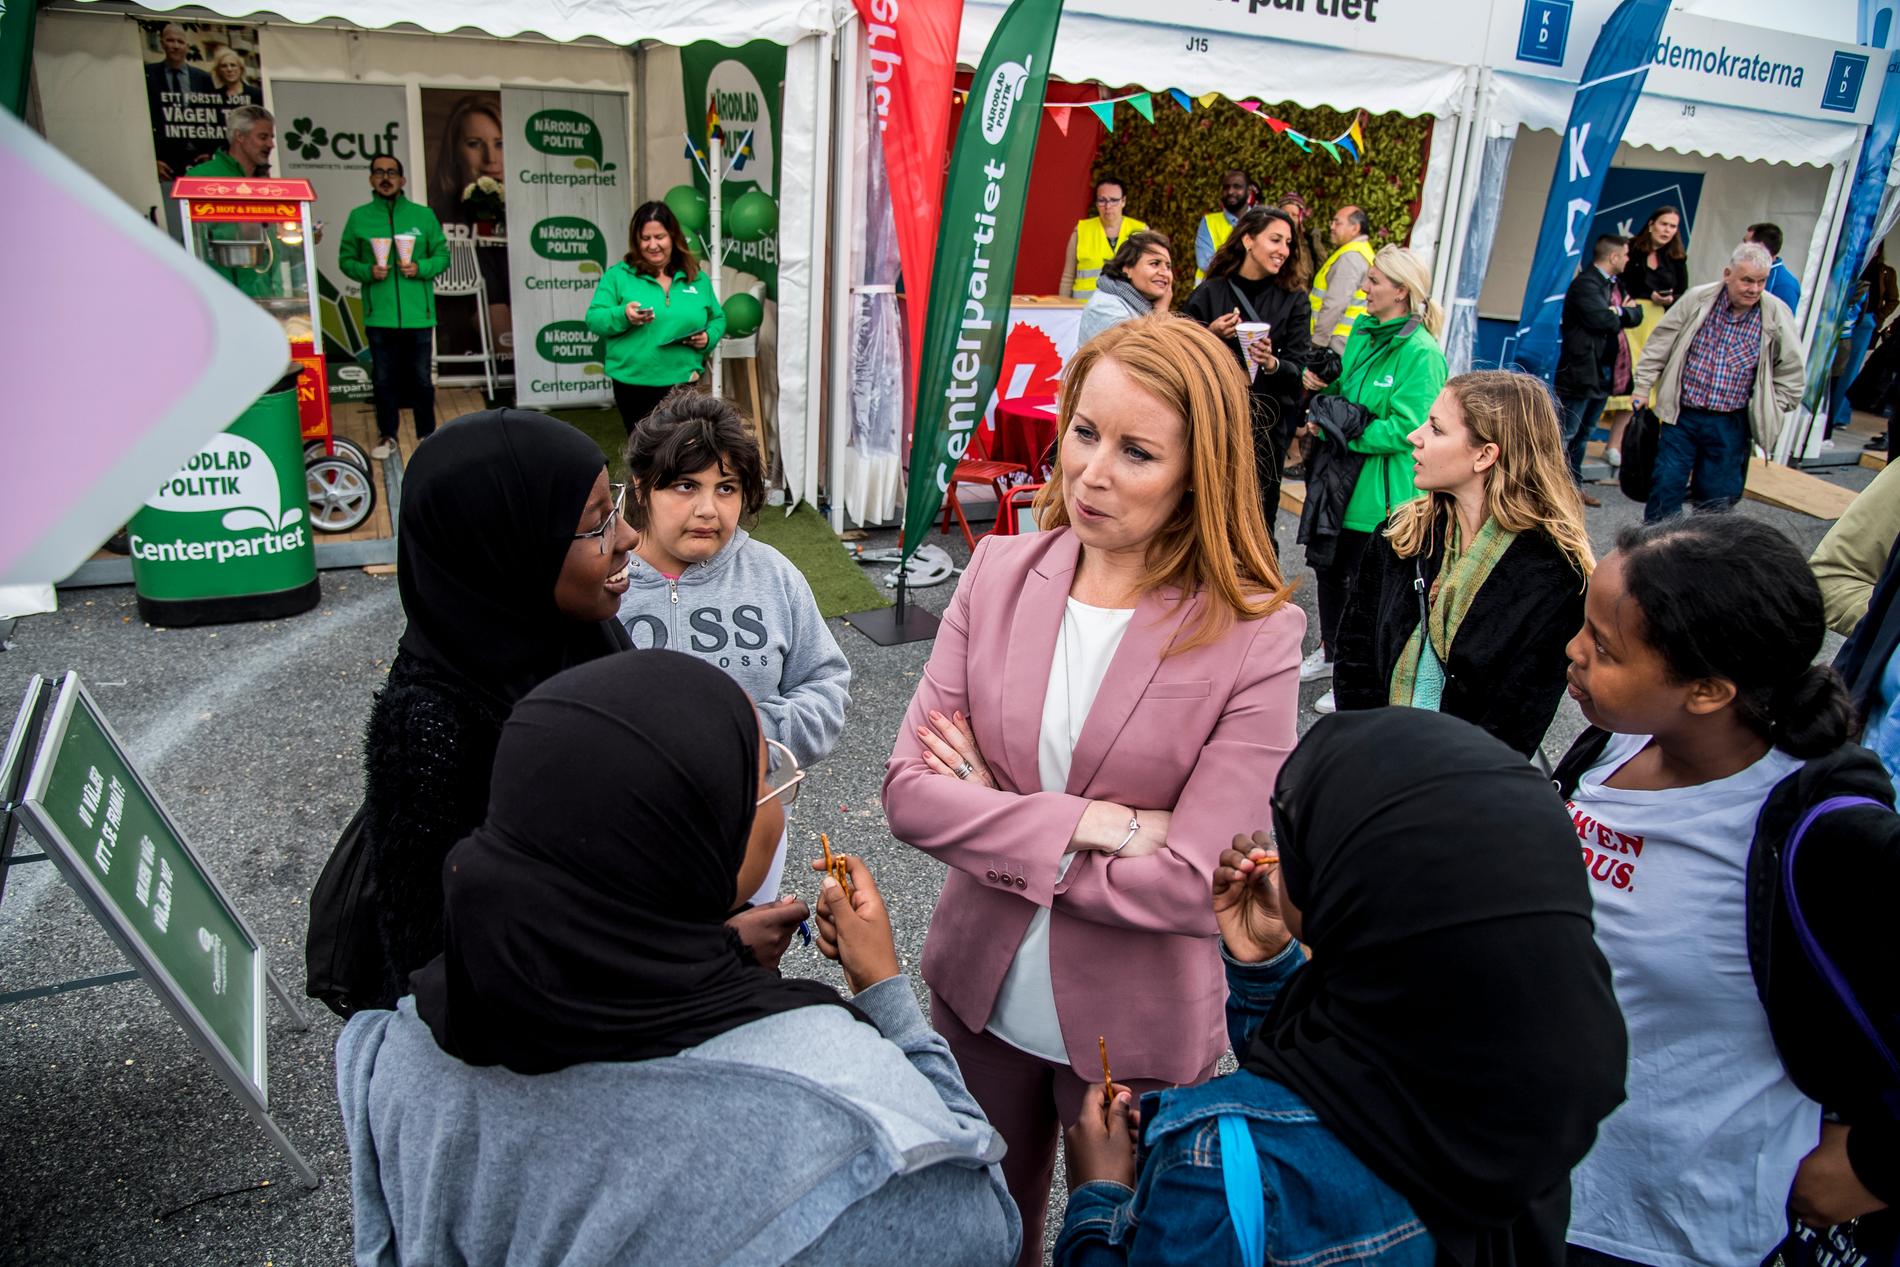 Annie Lööf i samspråk med några politikintresserade ungdomar.